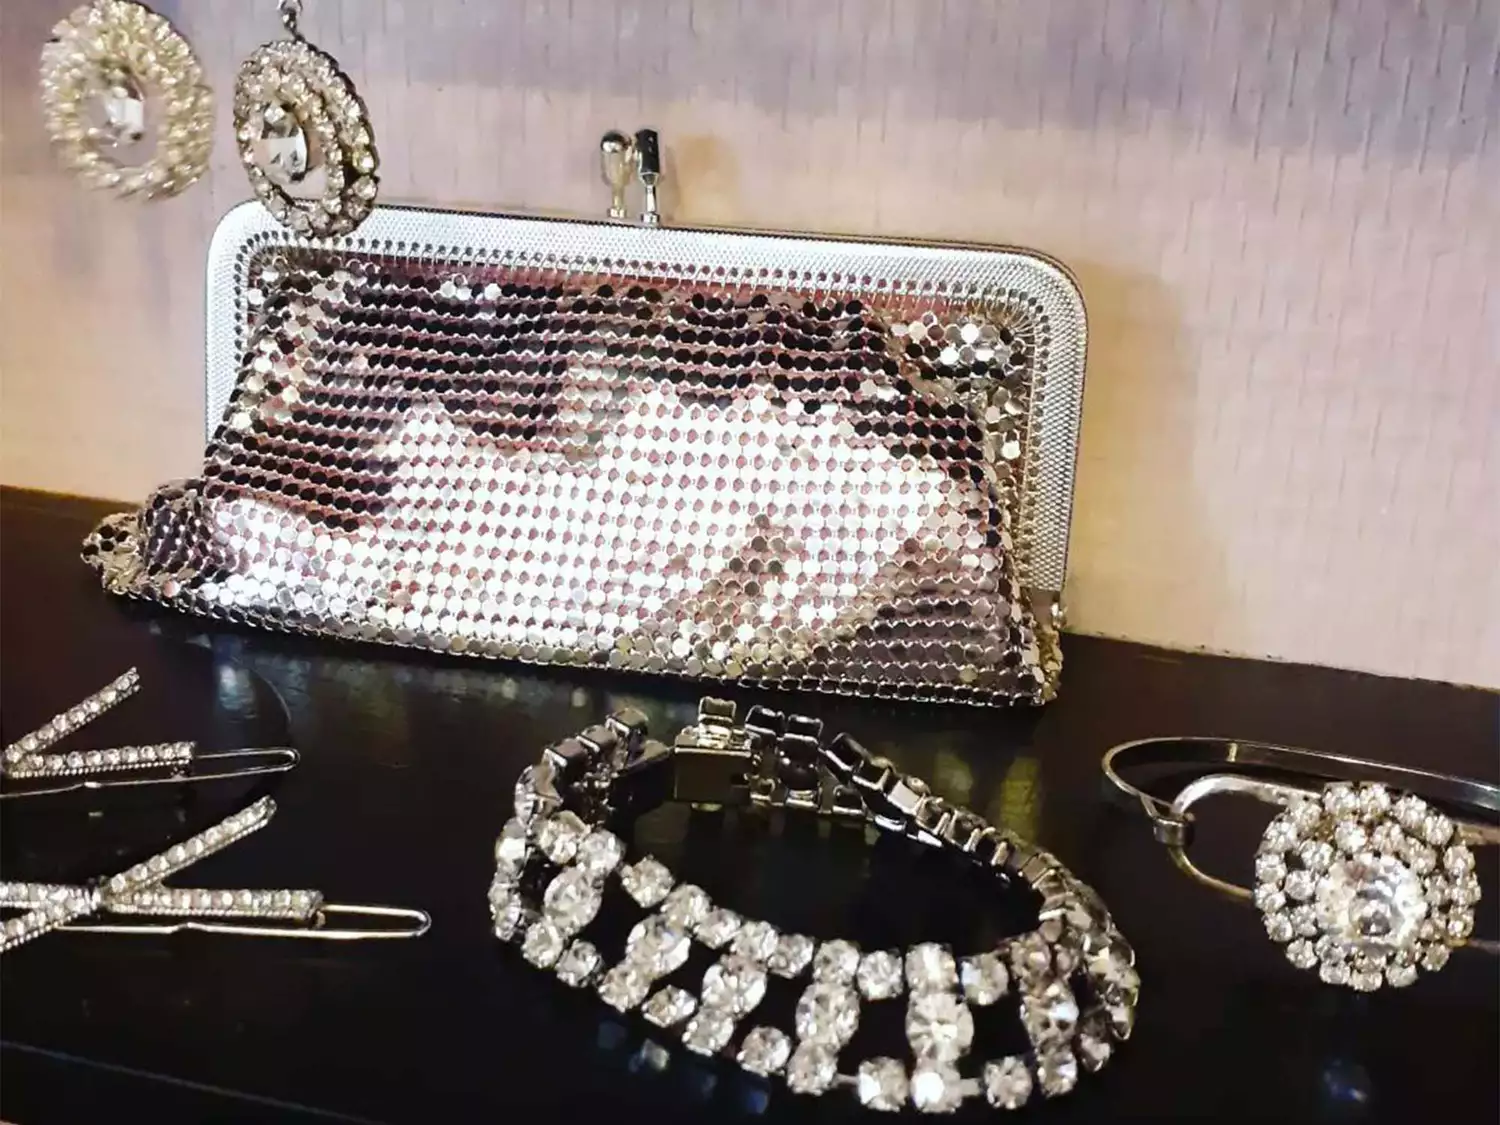 Silver accessories at Miss Sugar Cane.